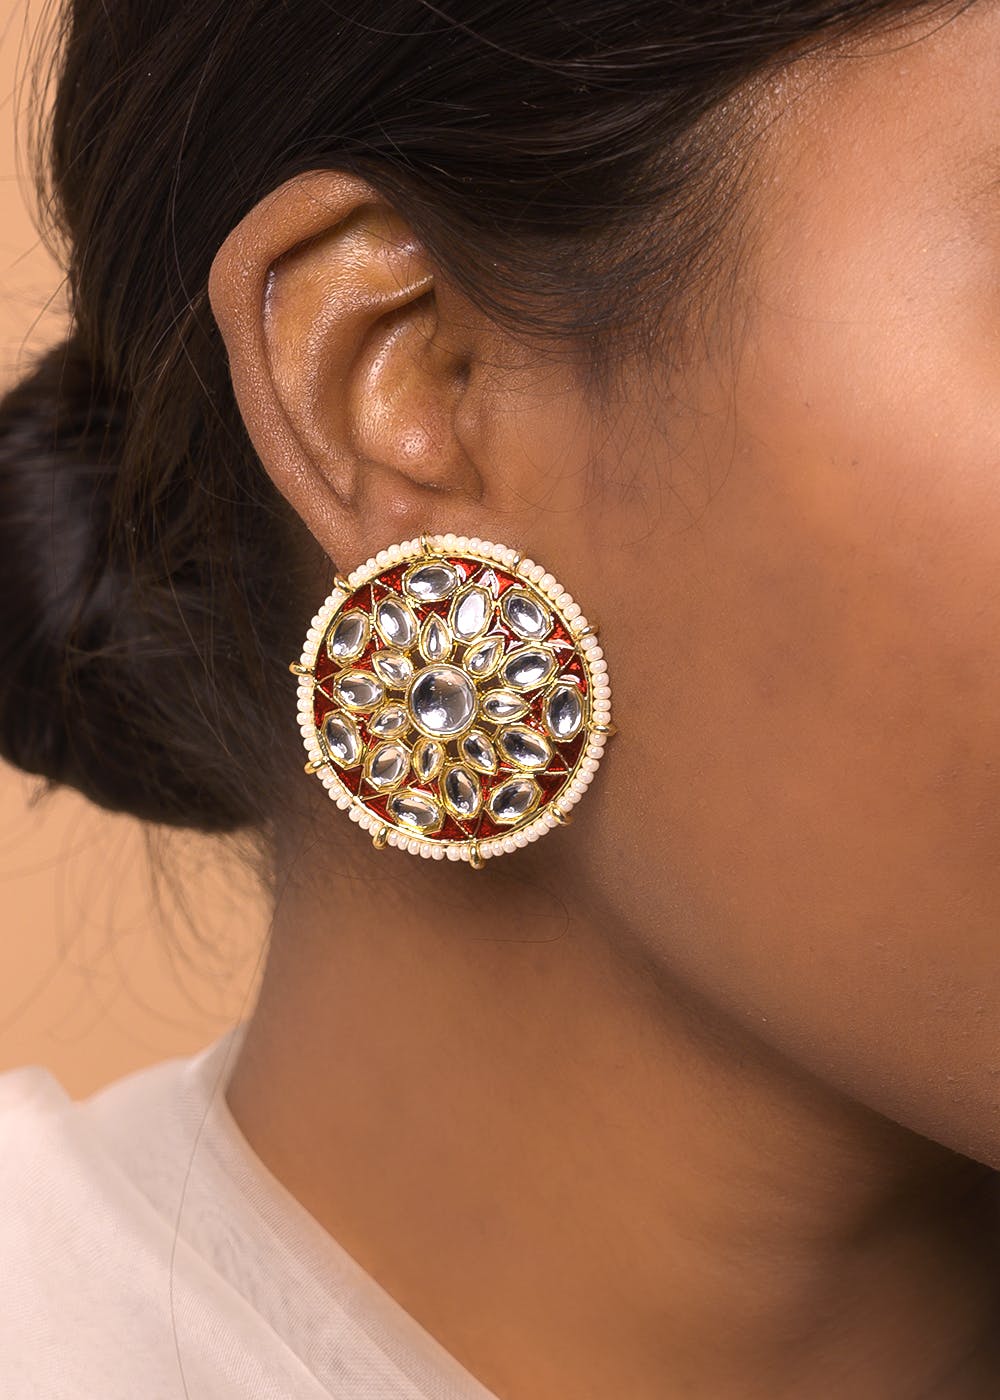 Round diamond stud earrings | Diamond earrings studs round, Diamond  earrings studs, Round diamond earrings